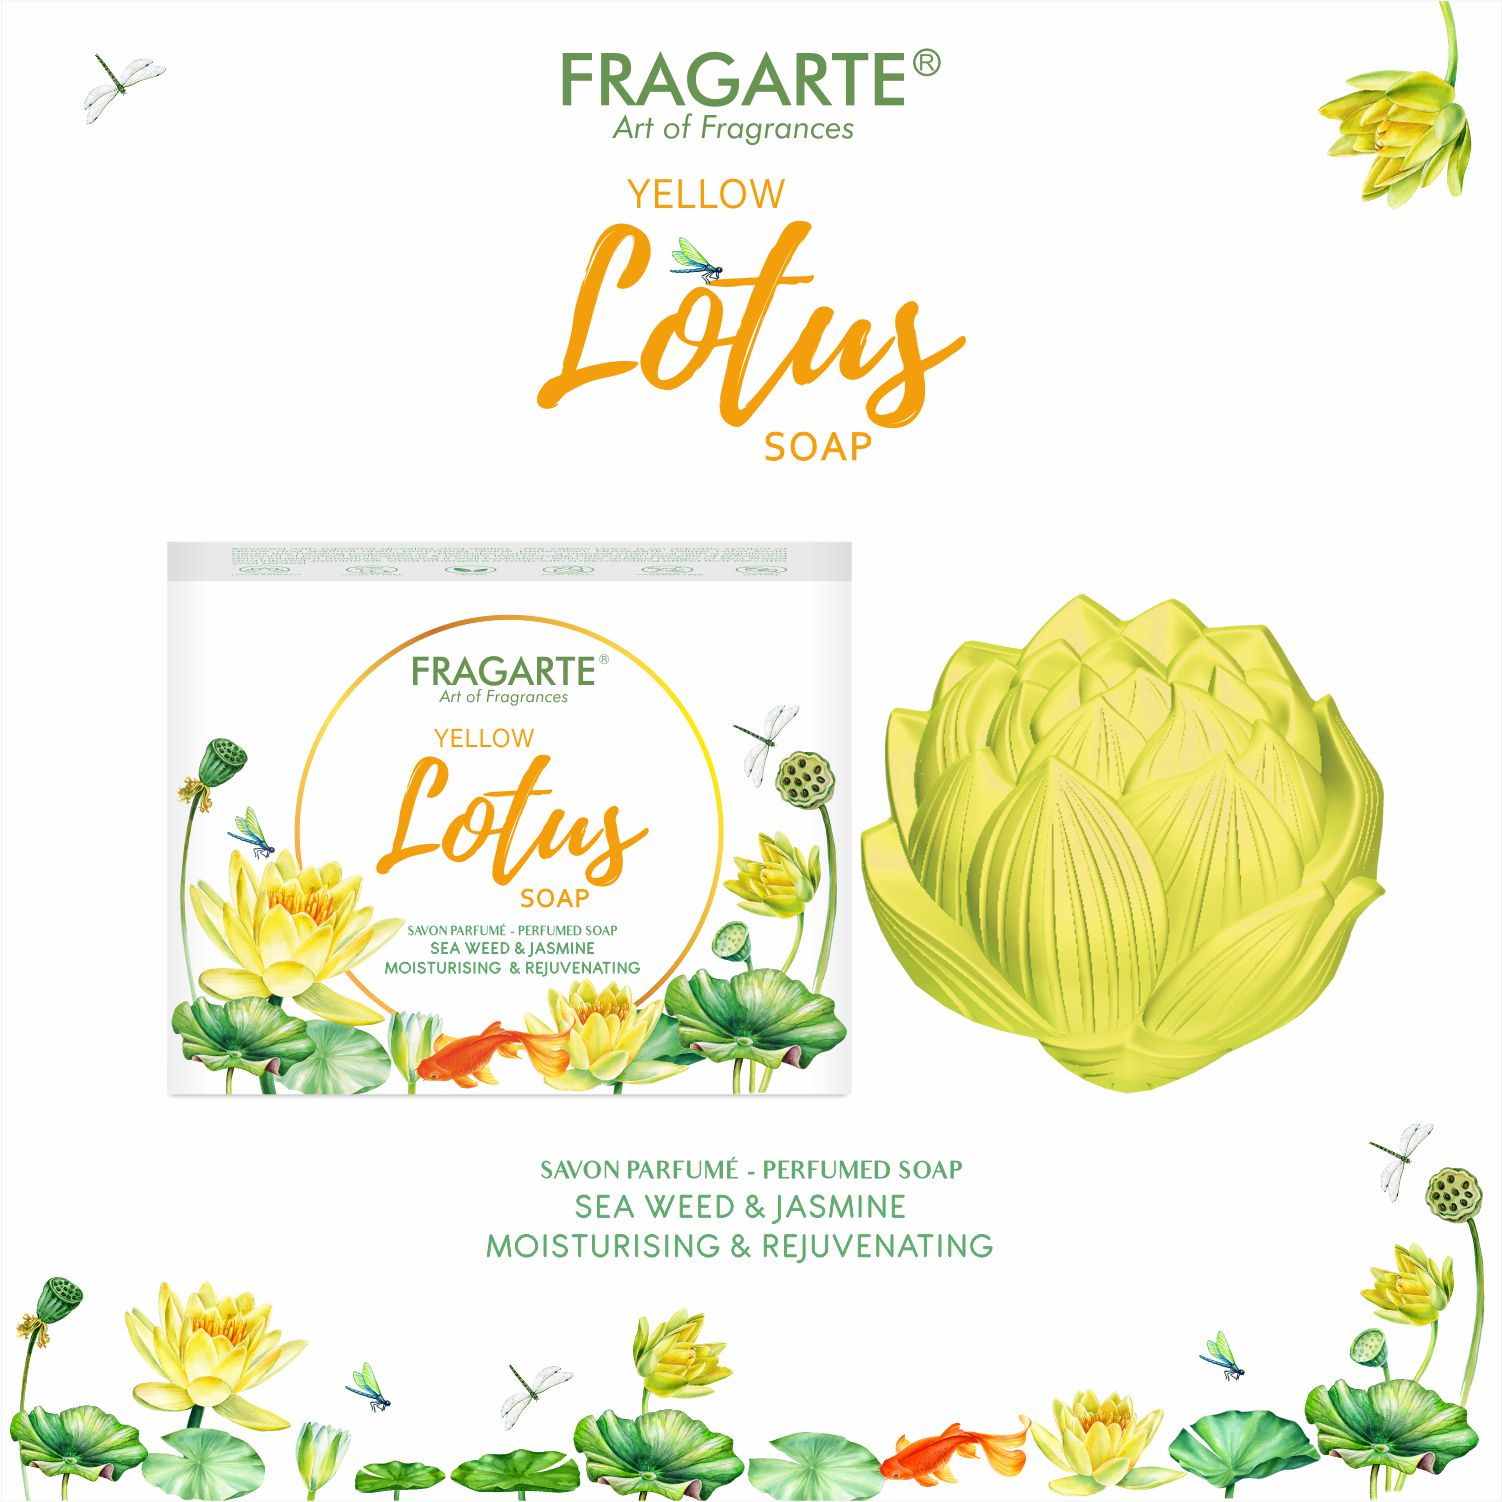 Fragarte Yellow Lotus Soap